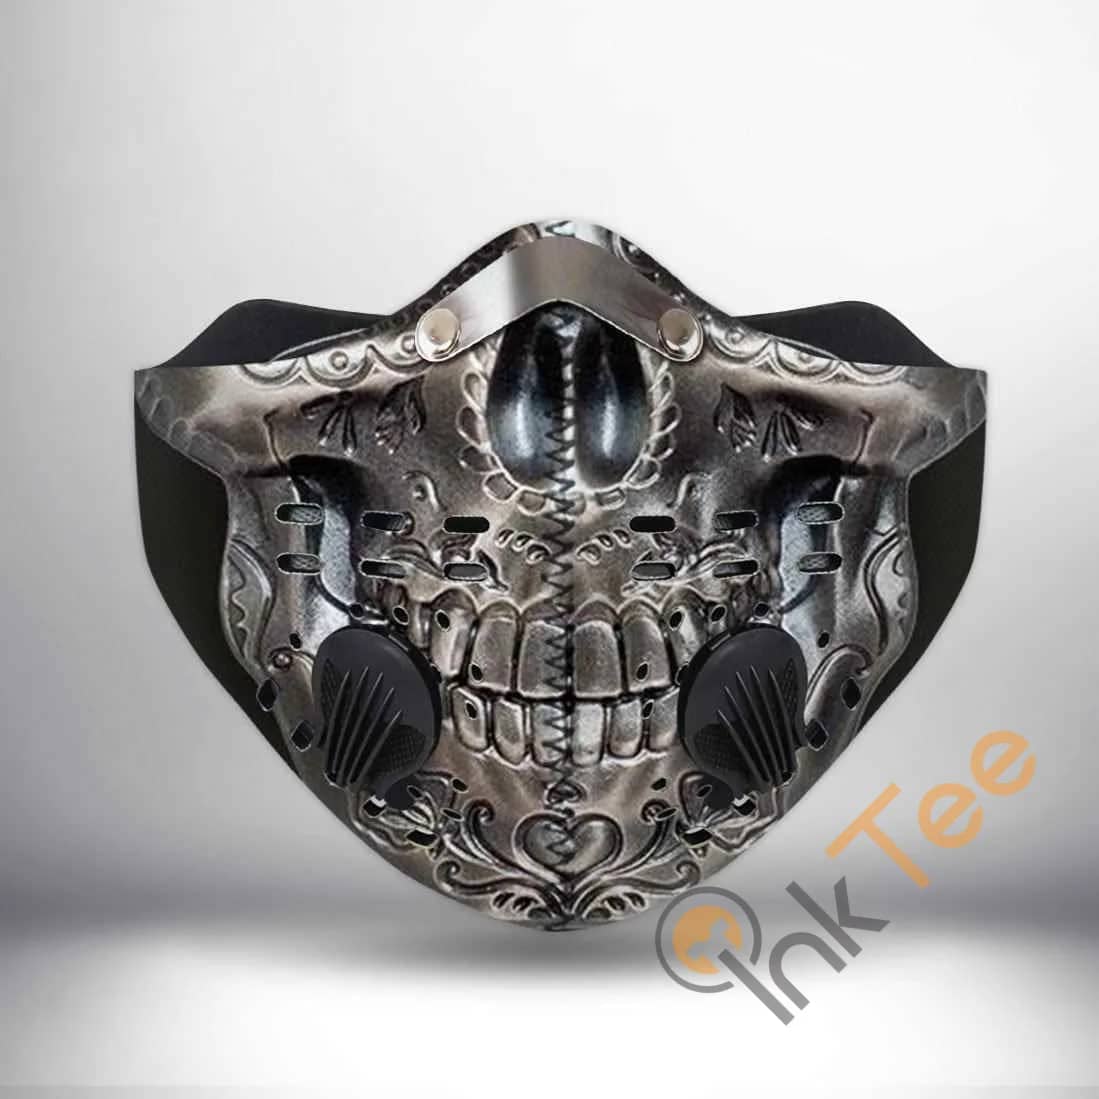 Skull Filter Activated Carbon Pm 2.5 Fm Sku 364 Face Mask